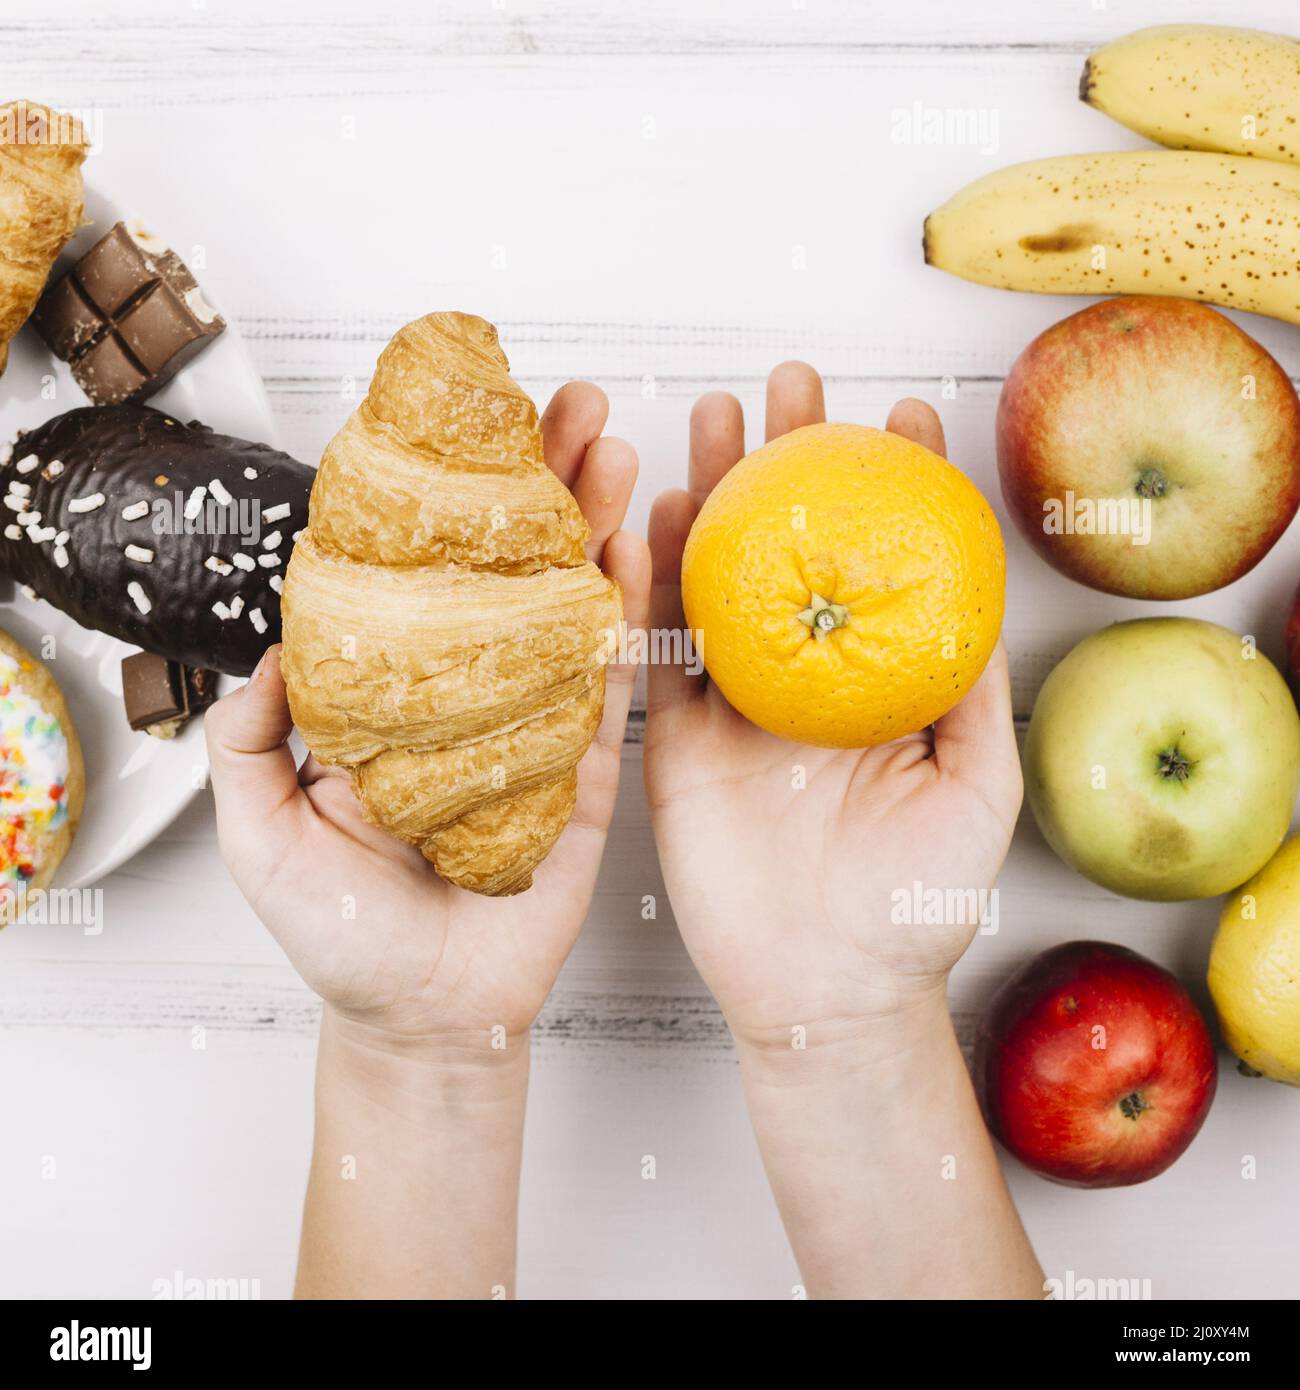 Healthy food vs unhealthy food. High quality photo Stock Photo